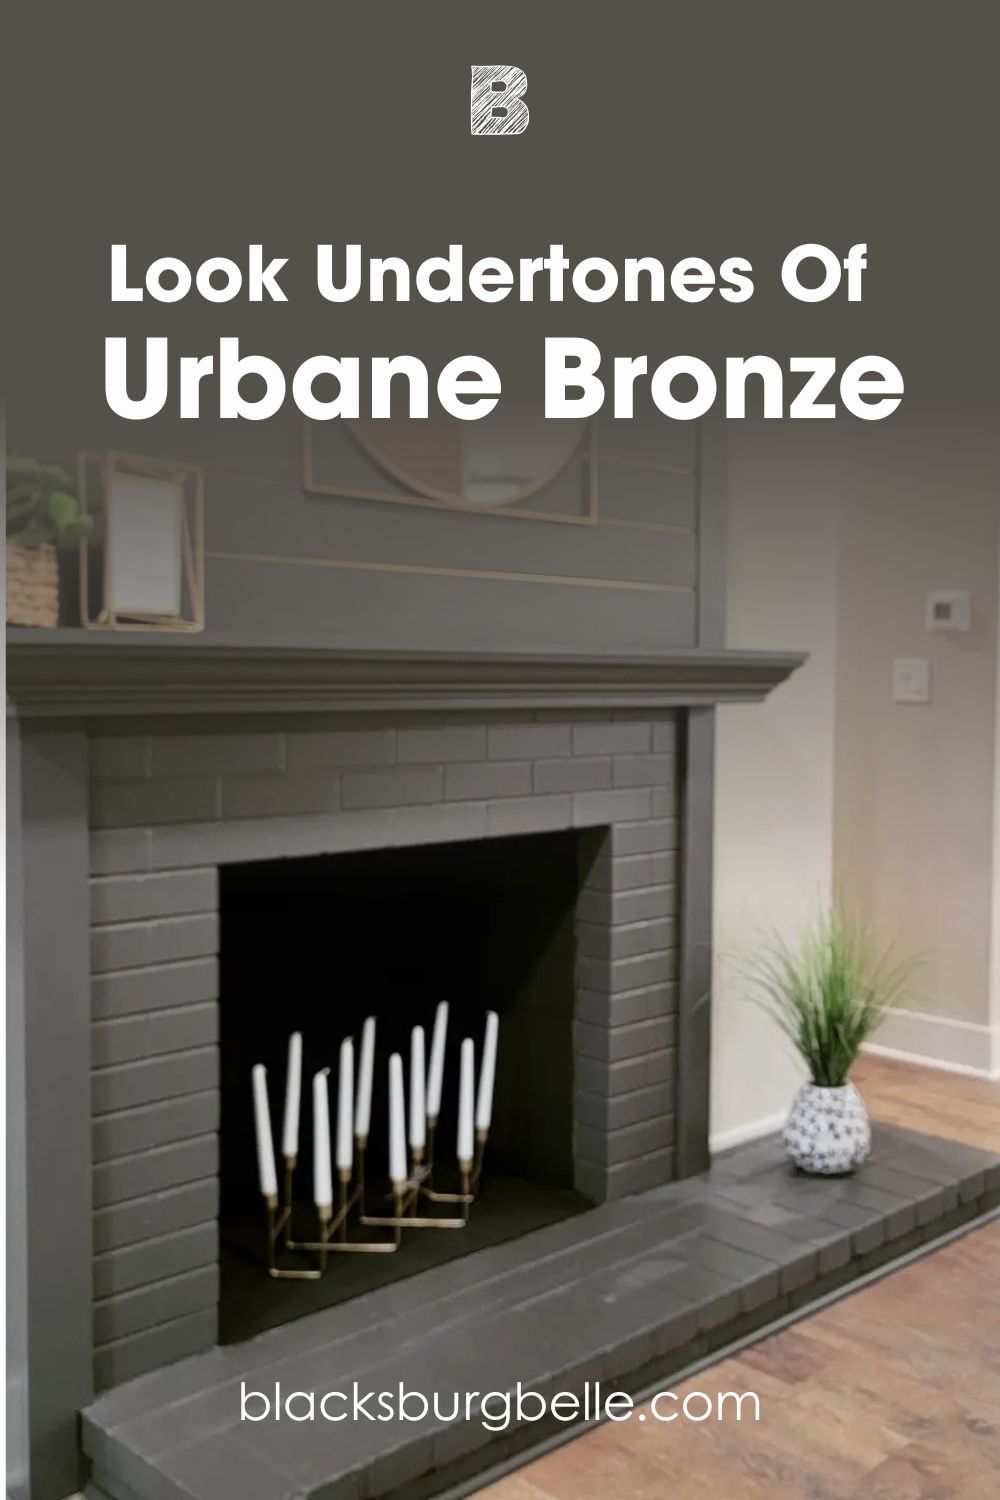 A Closer Look at Urbane Bronze’s Undertones